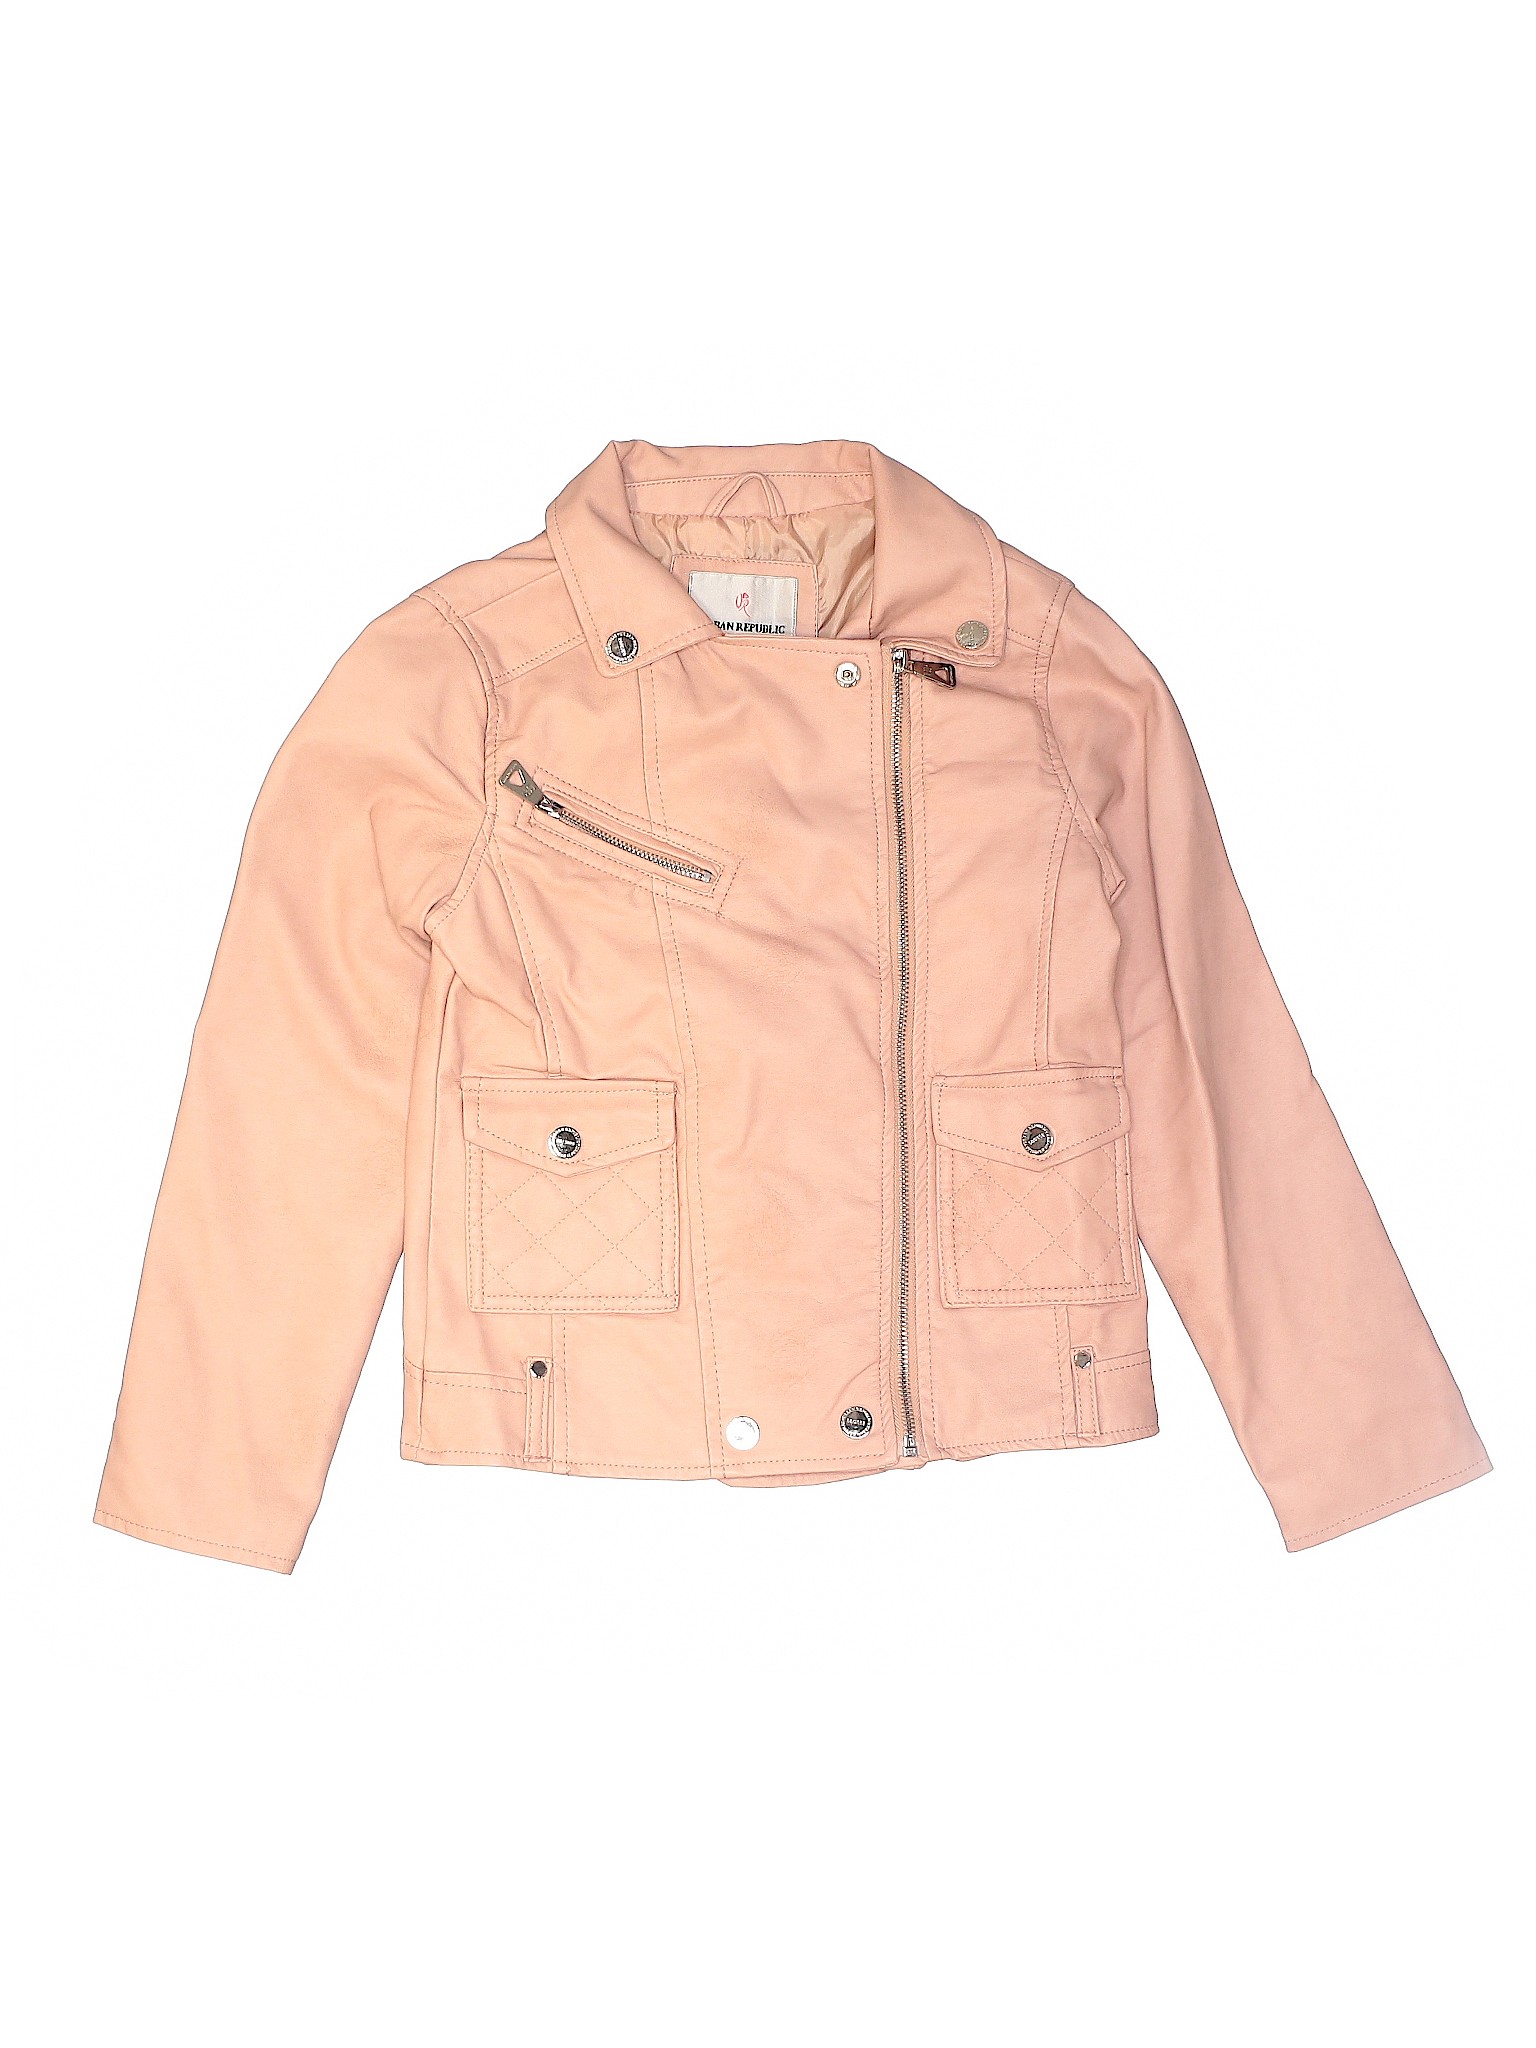 Urban Republic Girls Pink Faux Leather Jacket 10 | eBay